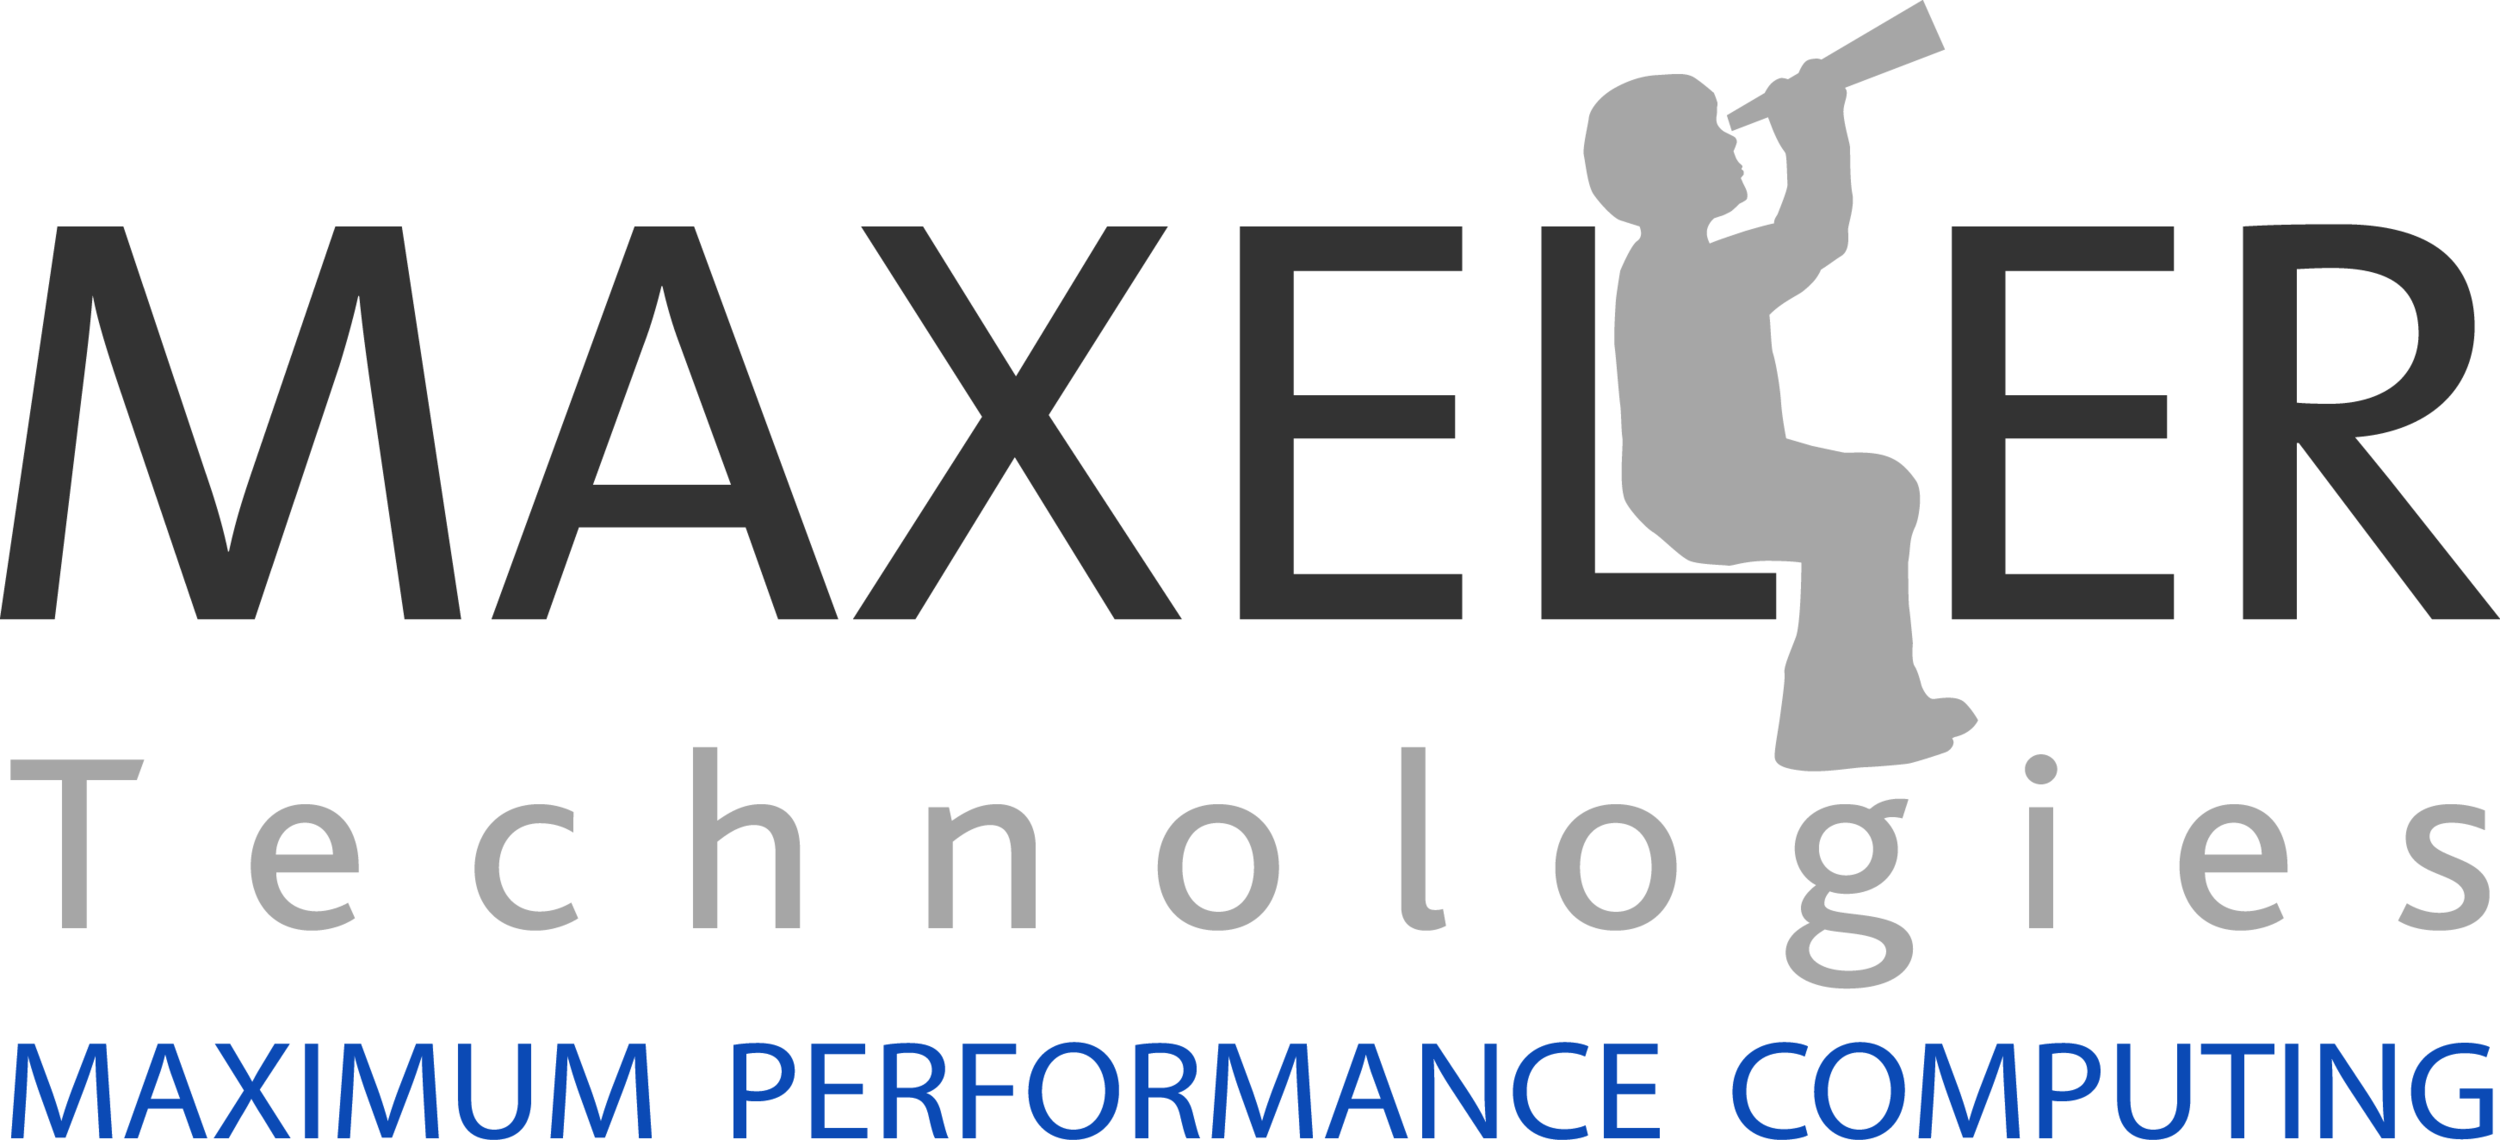 Maxeler-logo.png